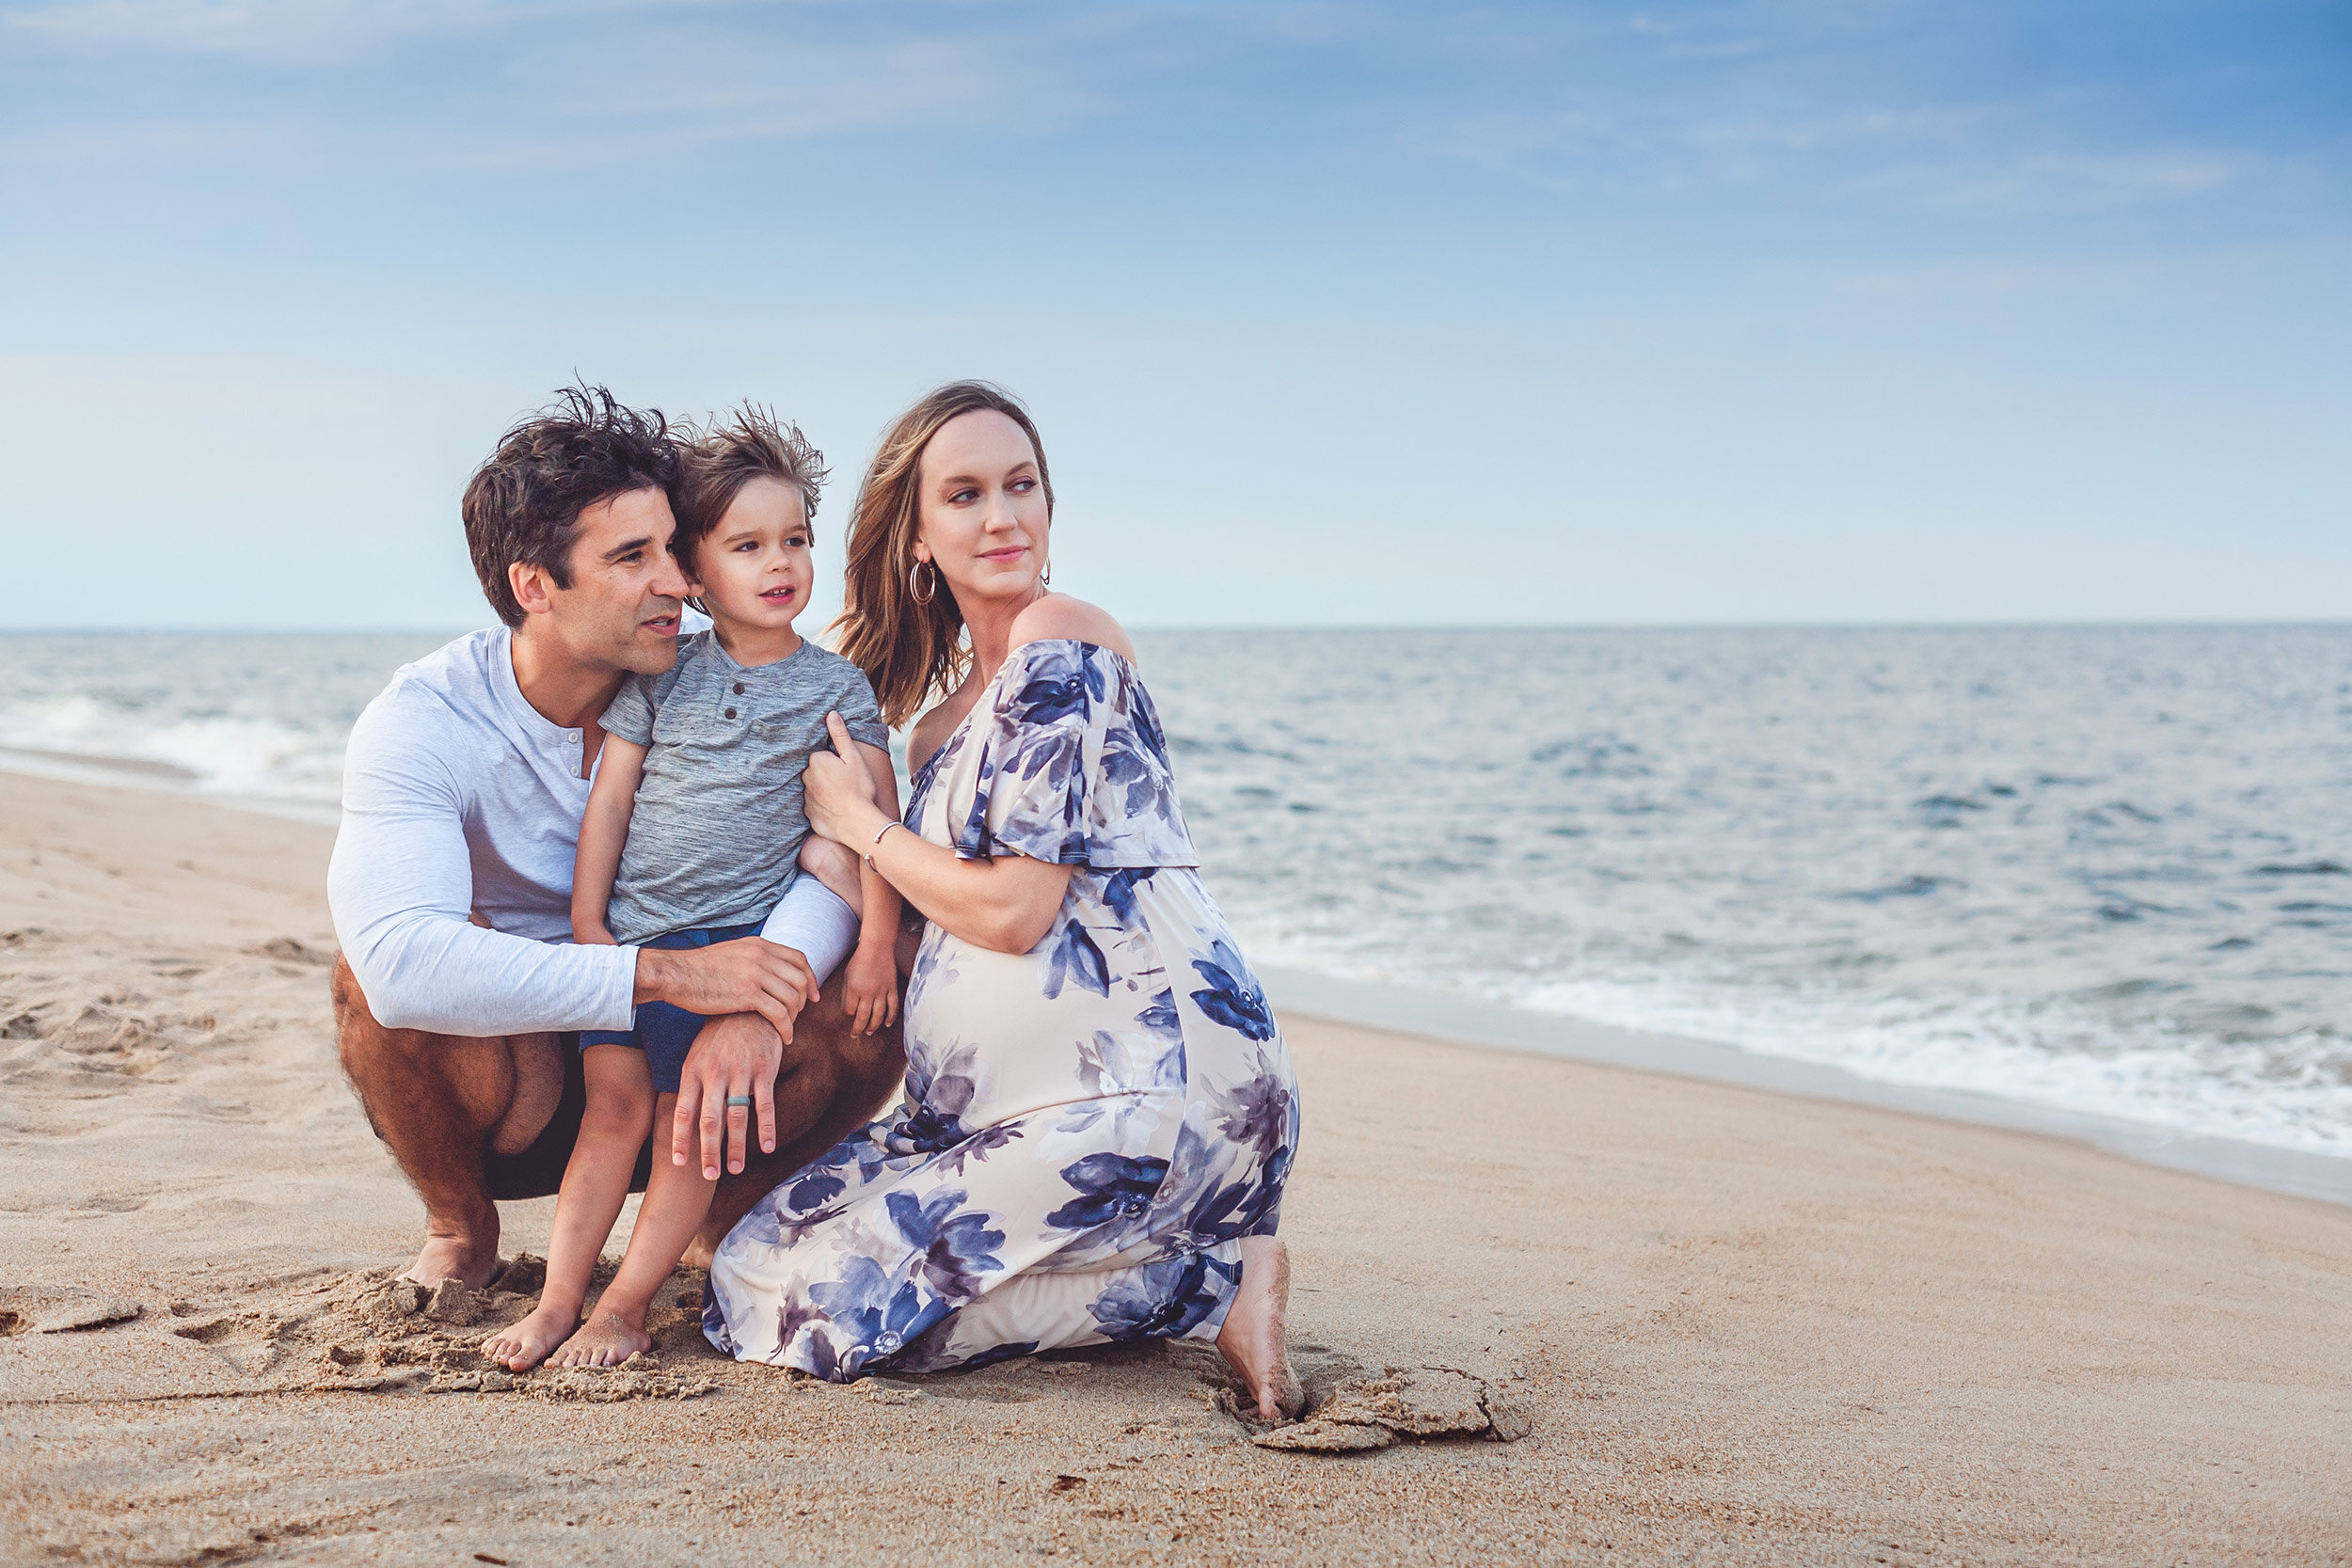 Plum Island Family Portrait | Stephen Grant Photography